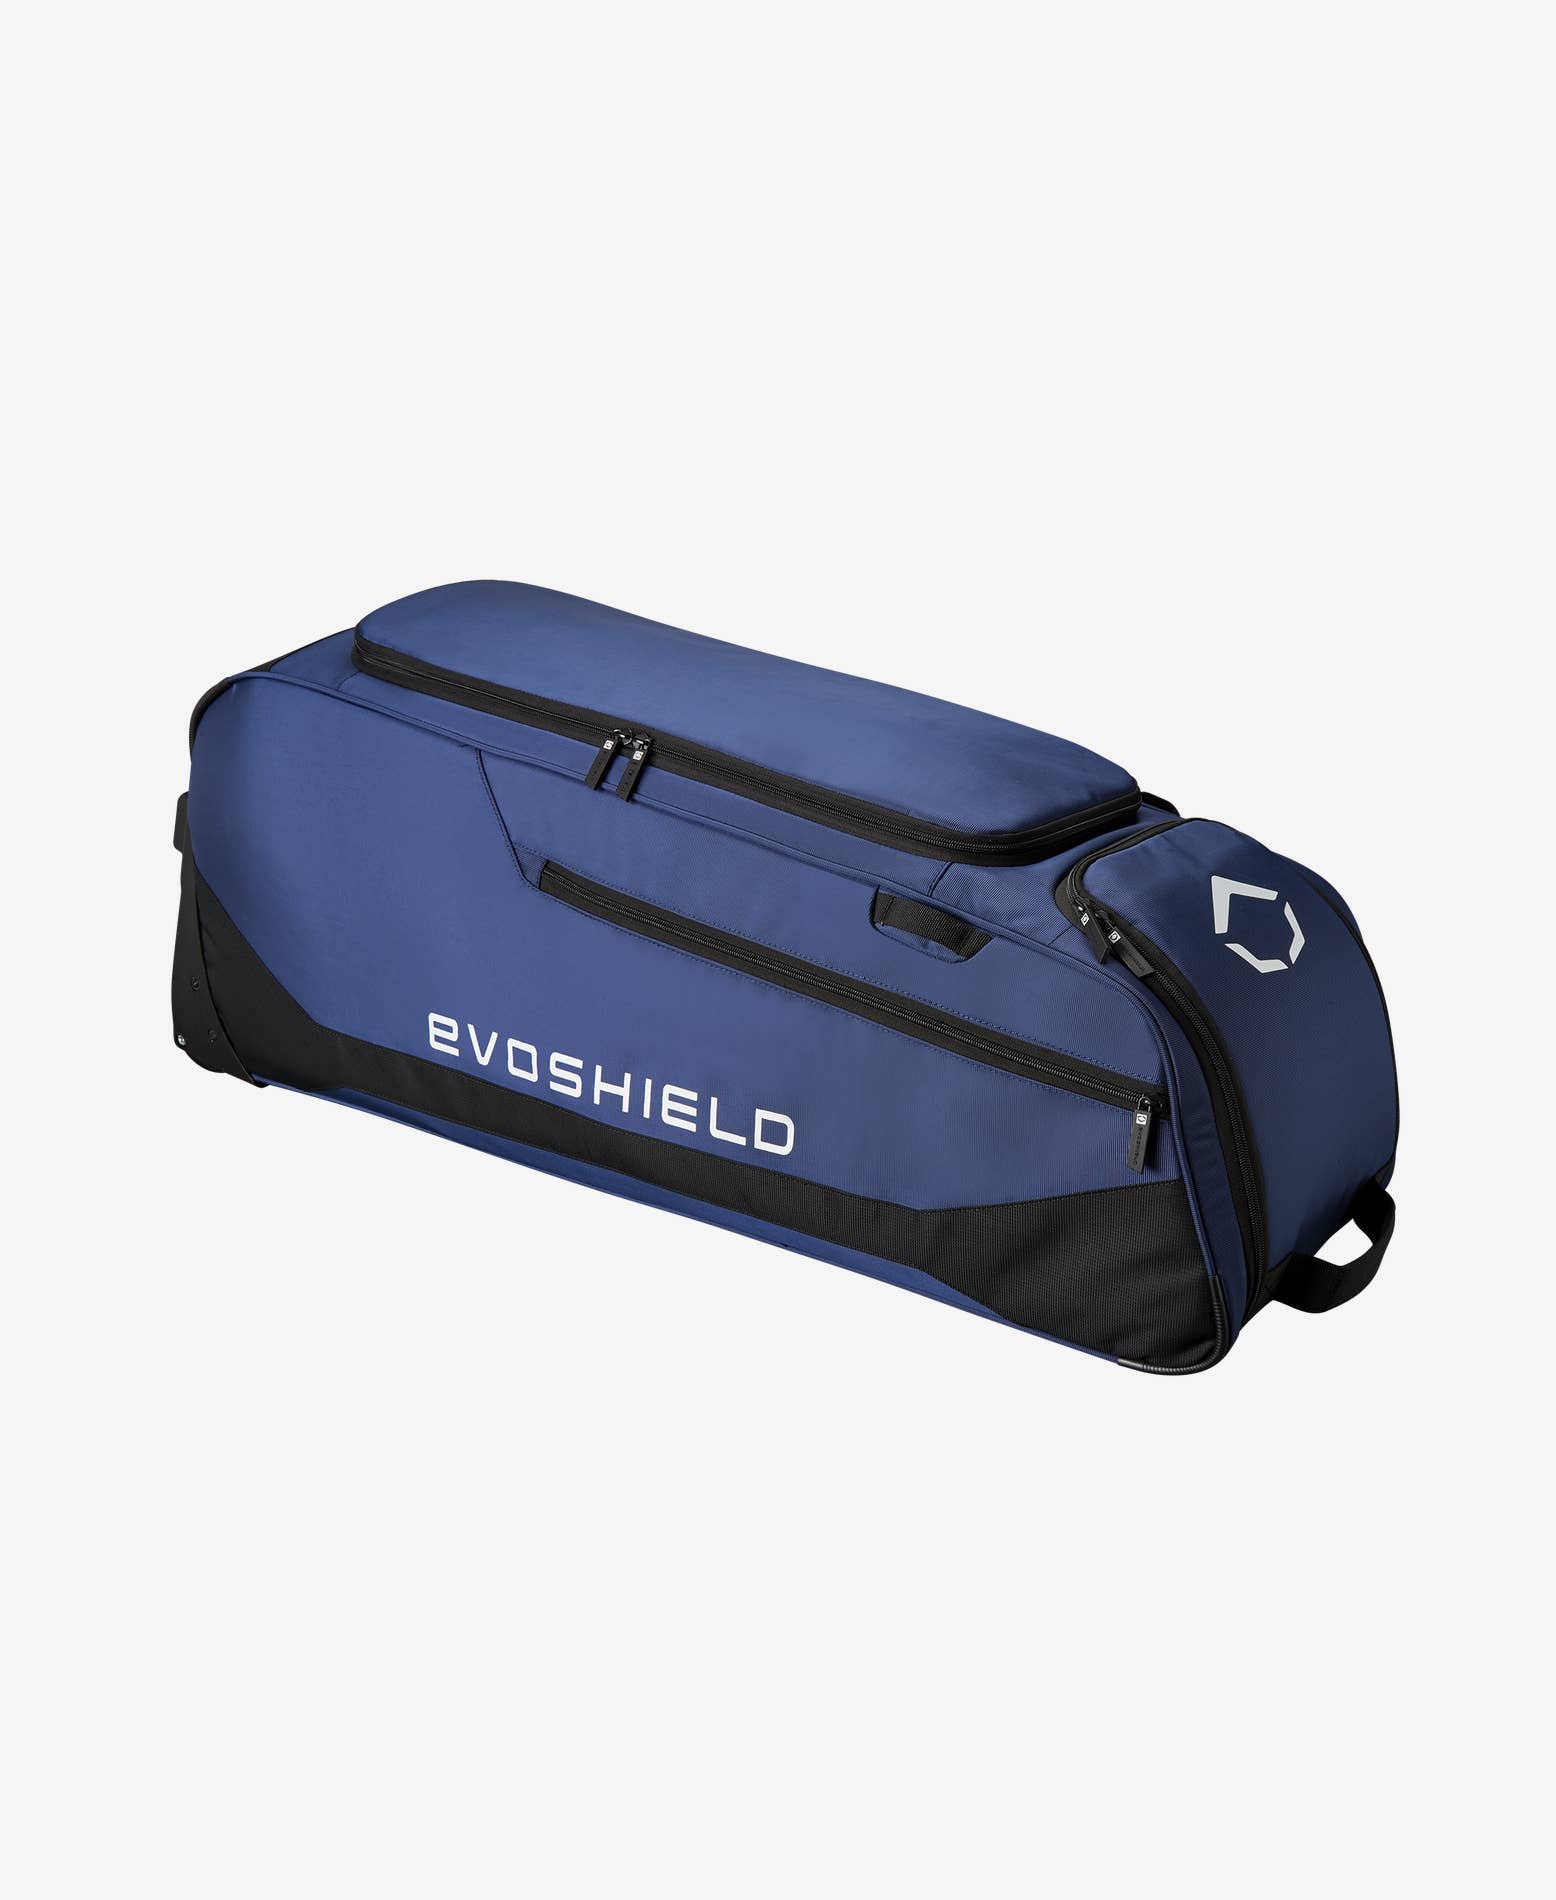 Amazon.com : EvoShield Standout Wheeled Bag : Sports & Outdoors